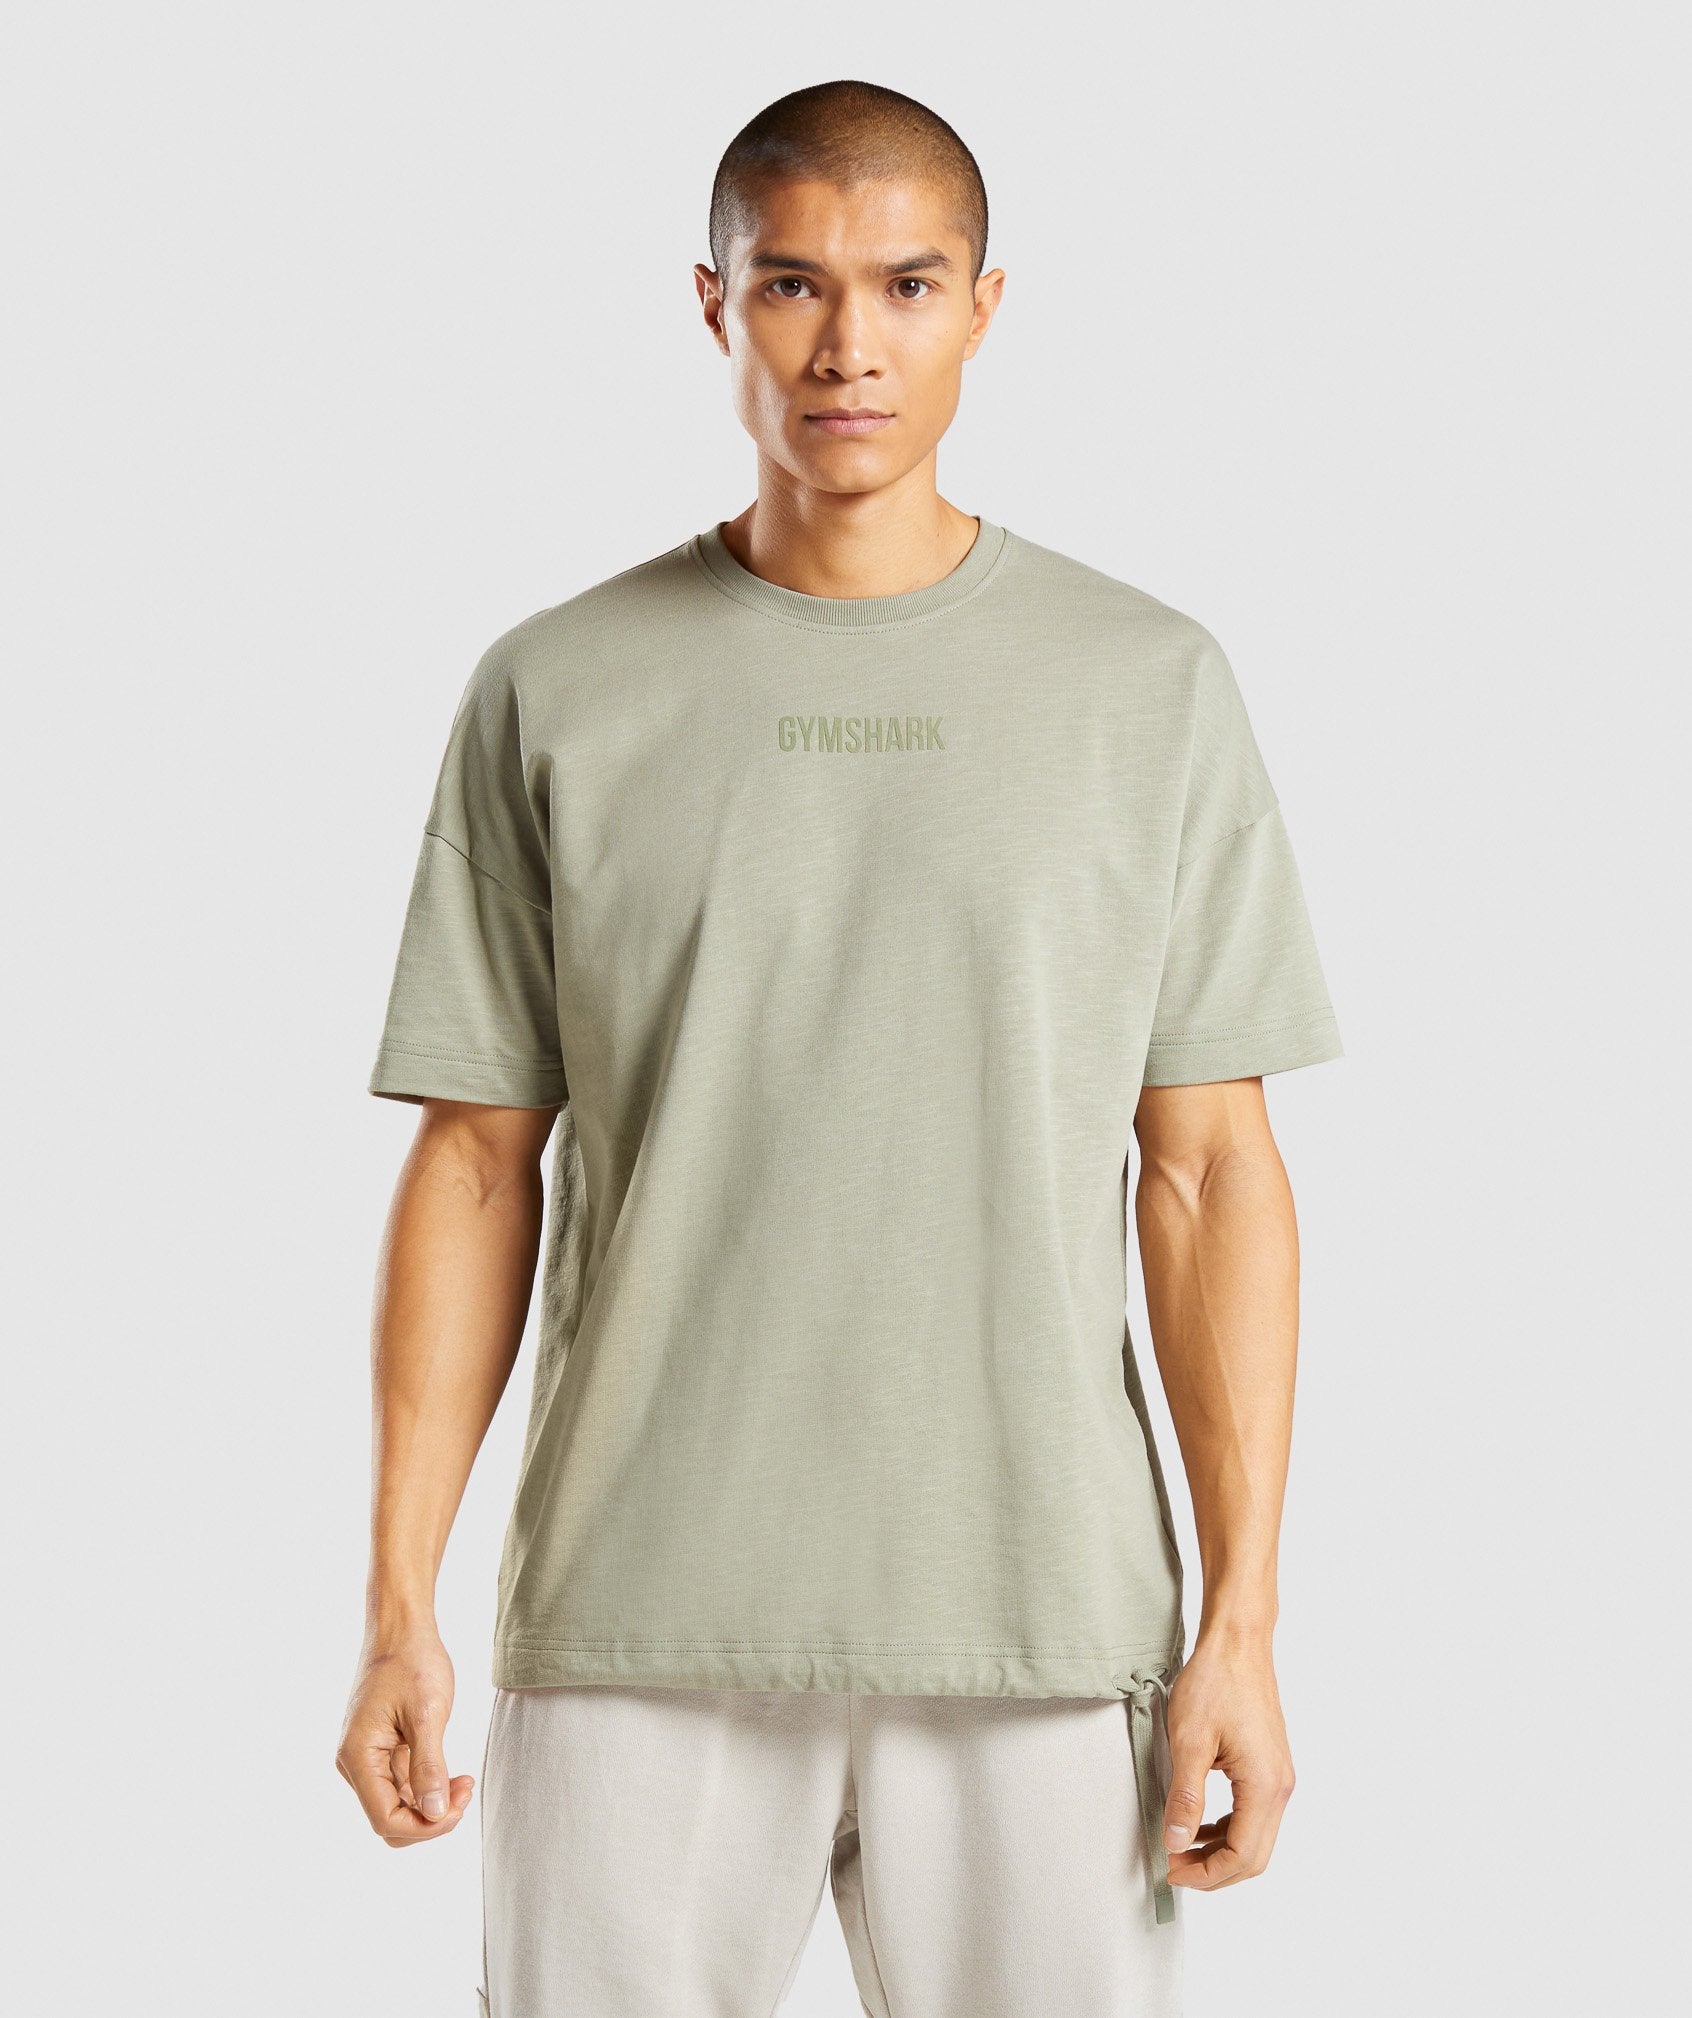 Restore T-Shirt in Light Green - view 1